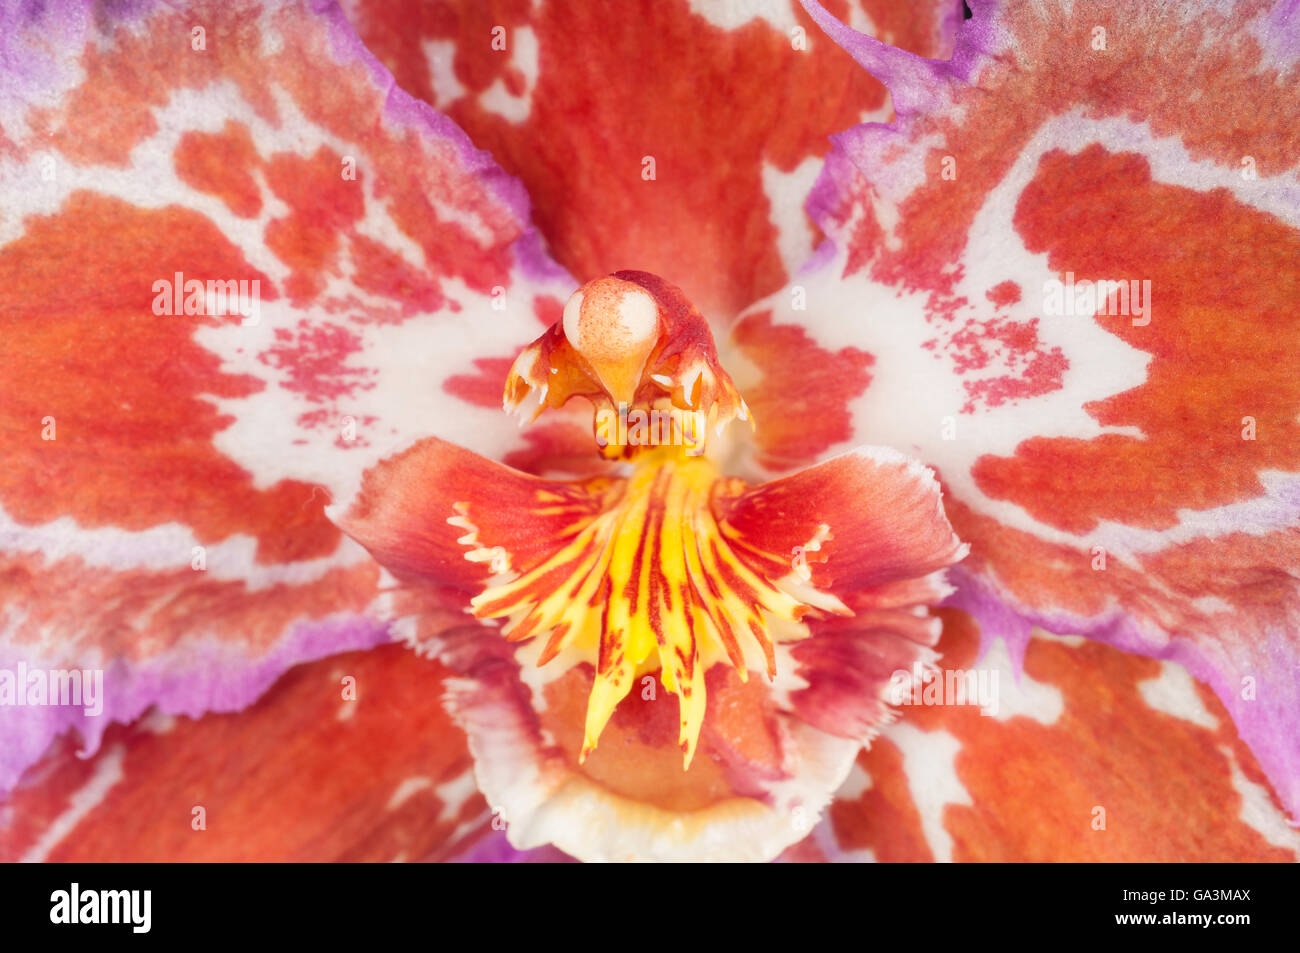 Odontioda, Oda Nichirei Sunrise x Odm crispum 'Rund', hybrid orchid Stock Photo